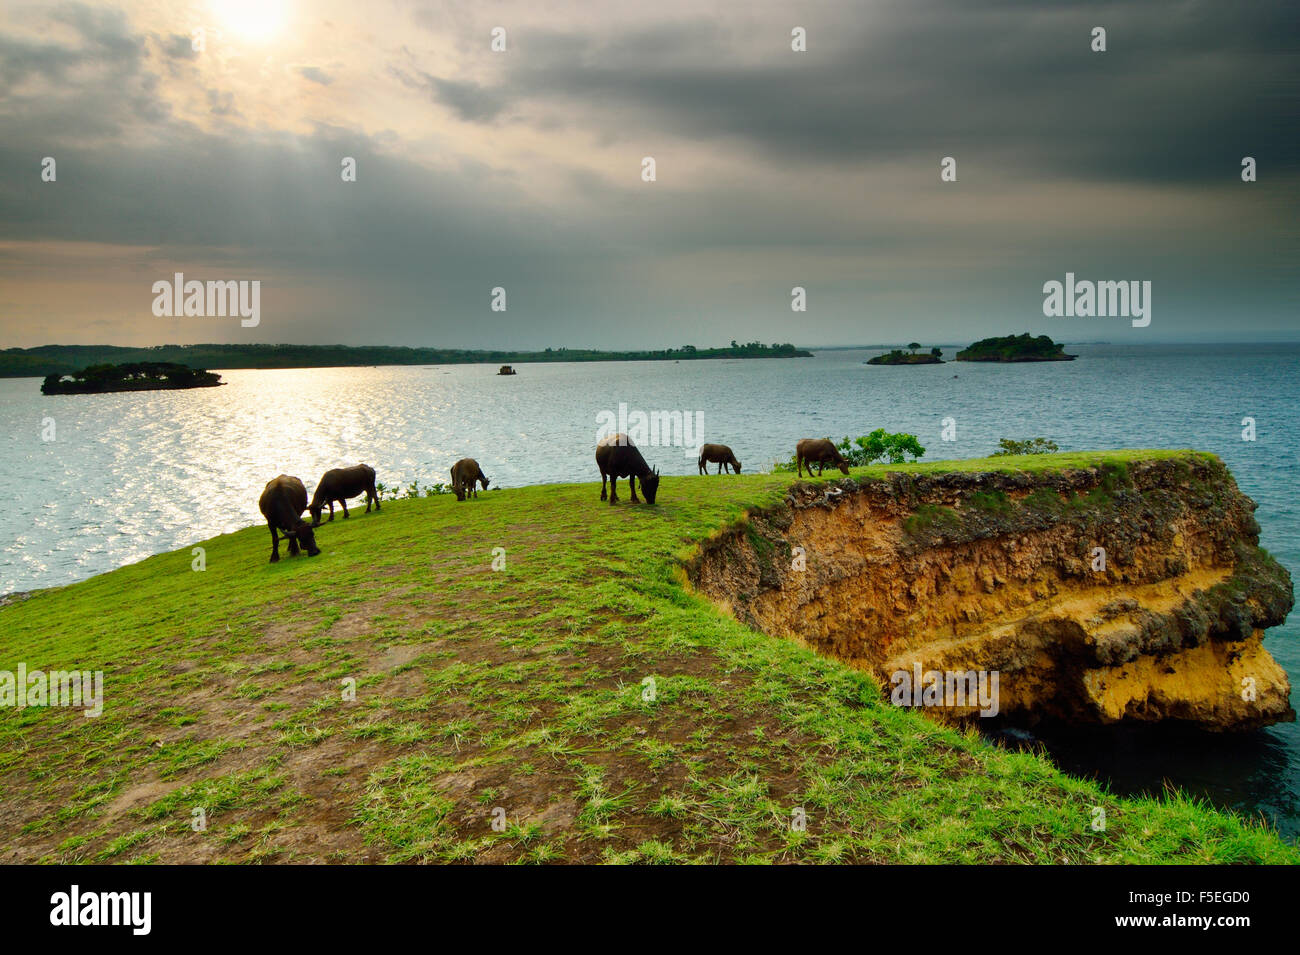 Herd of Buffalo grazing by sea, Tangsi beach, West Nusa Tenggara, Indonesia Stock Photo